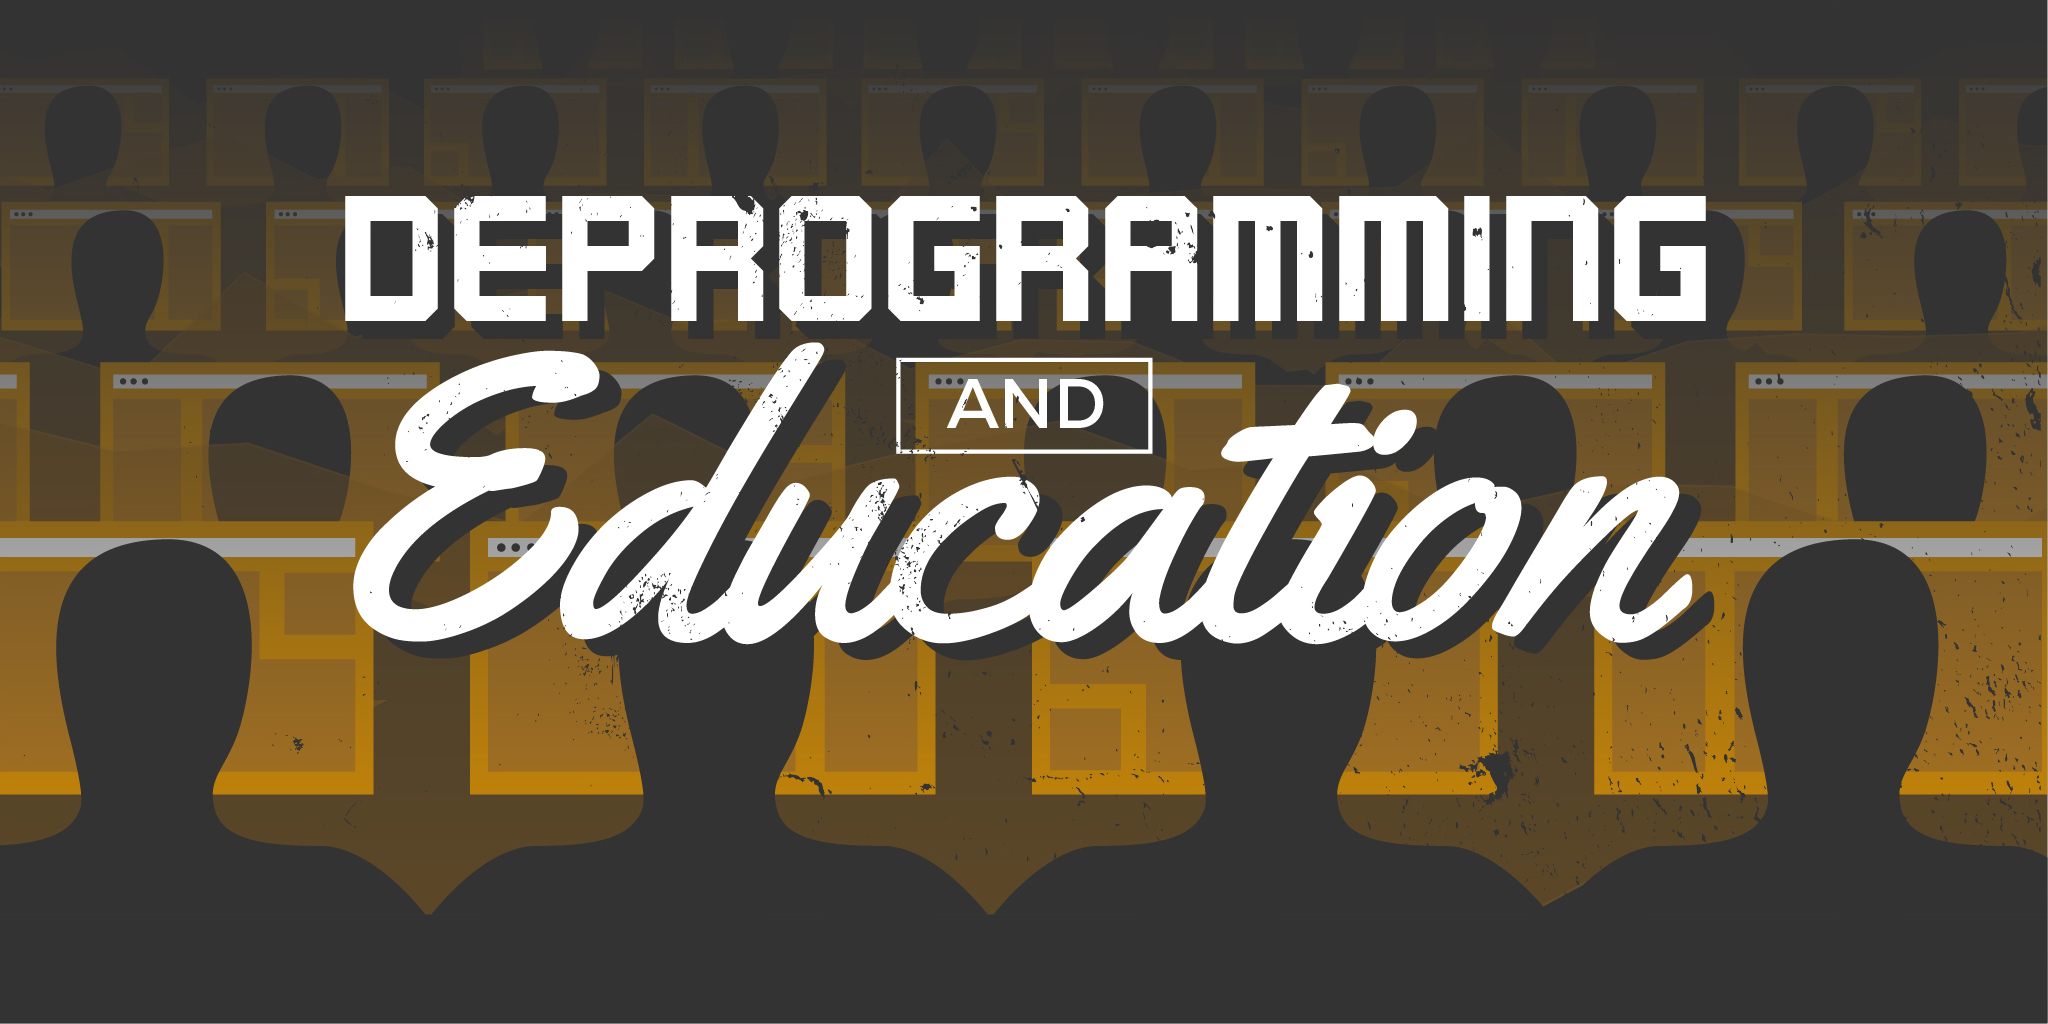 deprogramming-and-education-hero